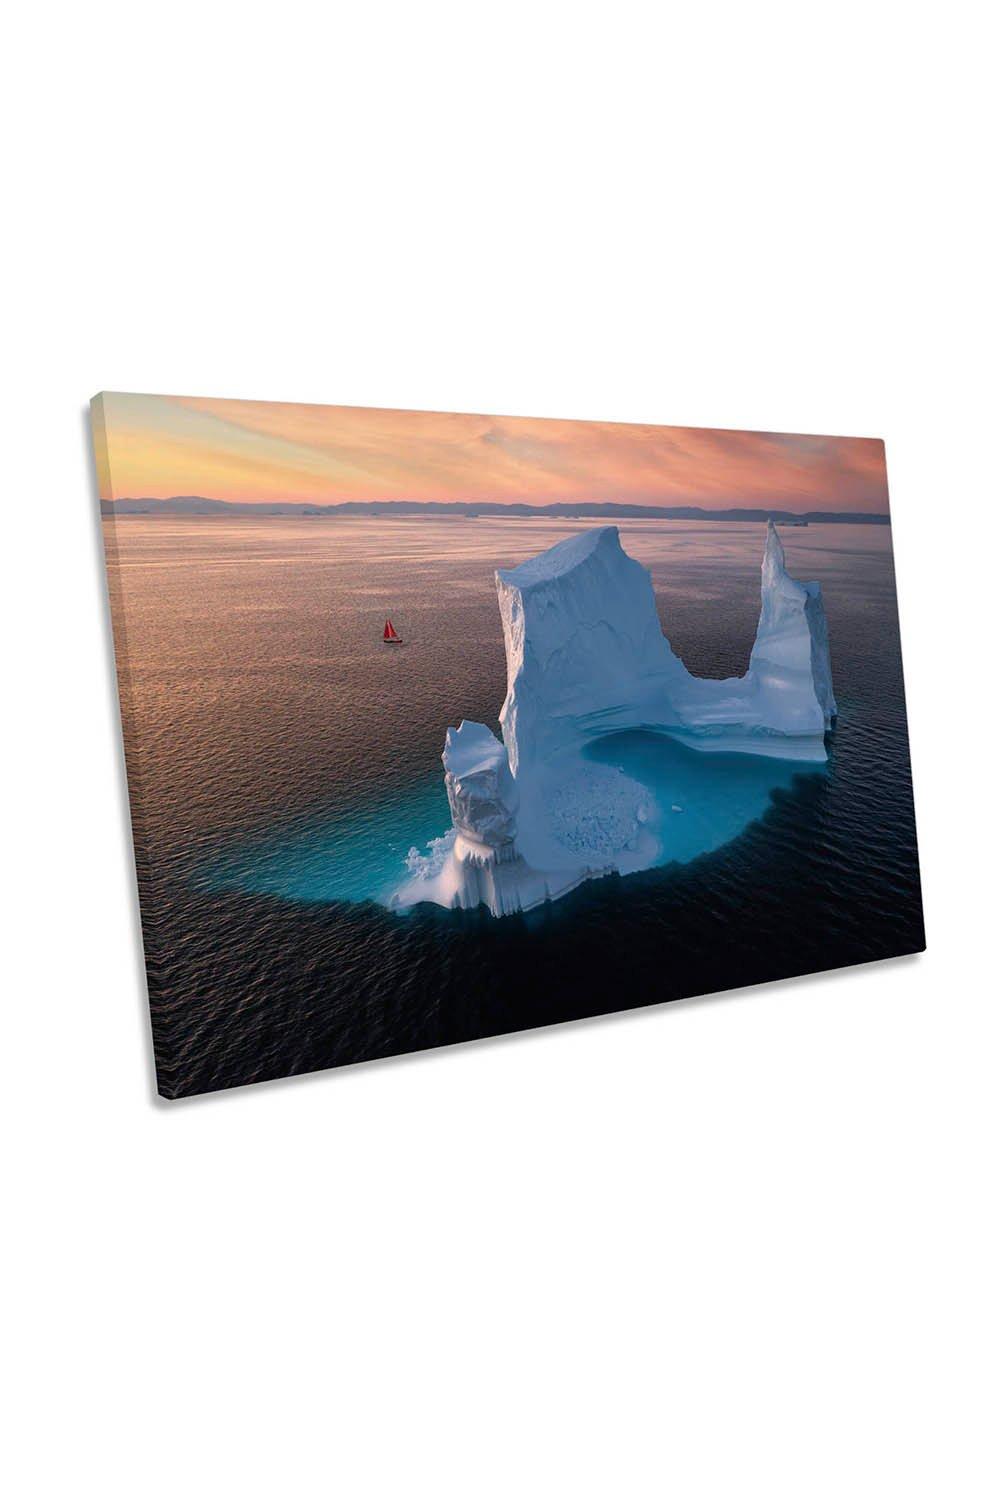 Ephemeral Giants Iceberg Sail Boat Canvas Wall Art Picture Print